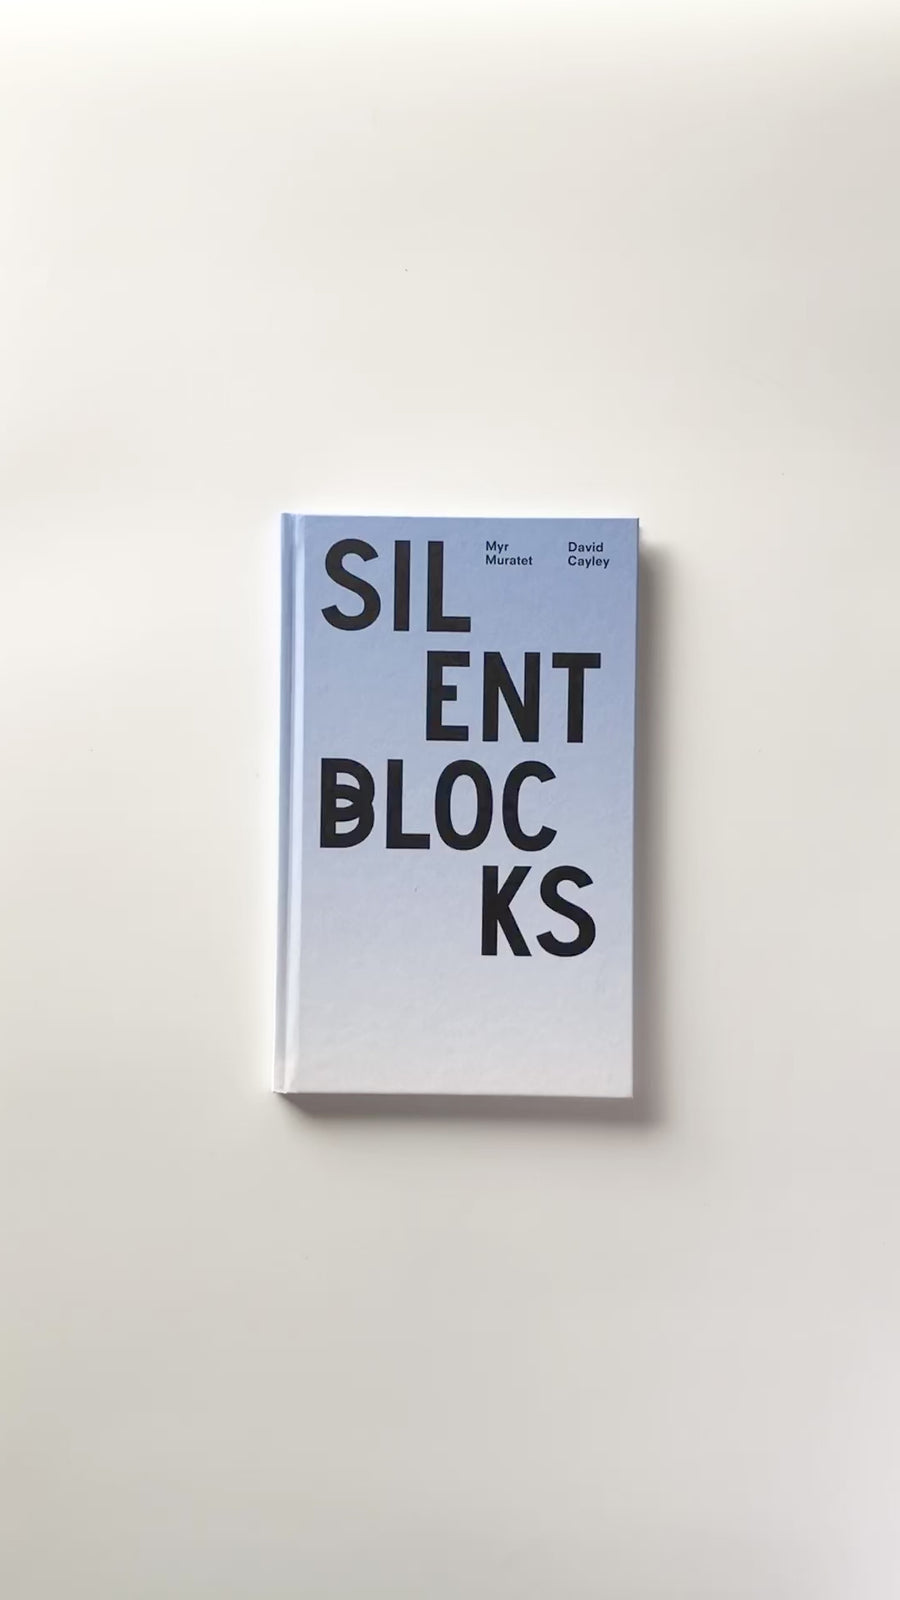 Silent Blocks by Myr Muratet